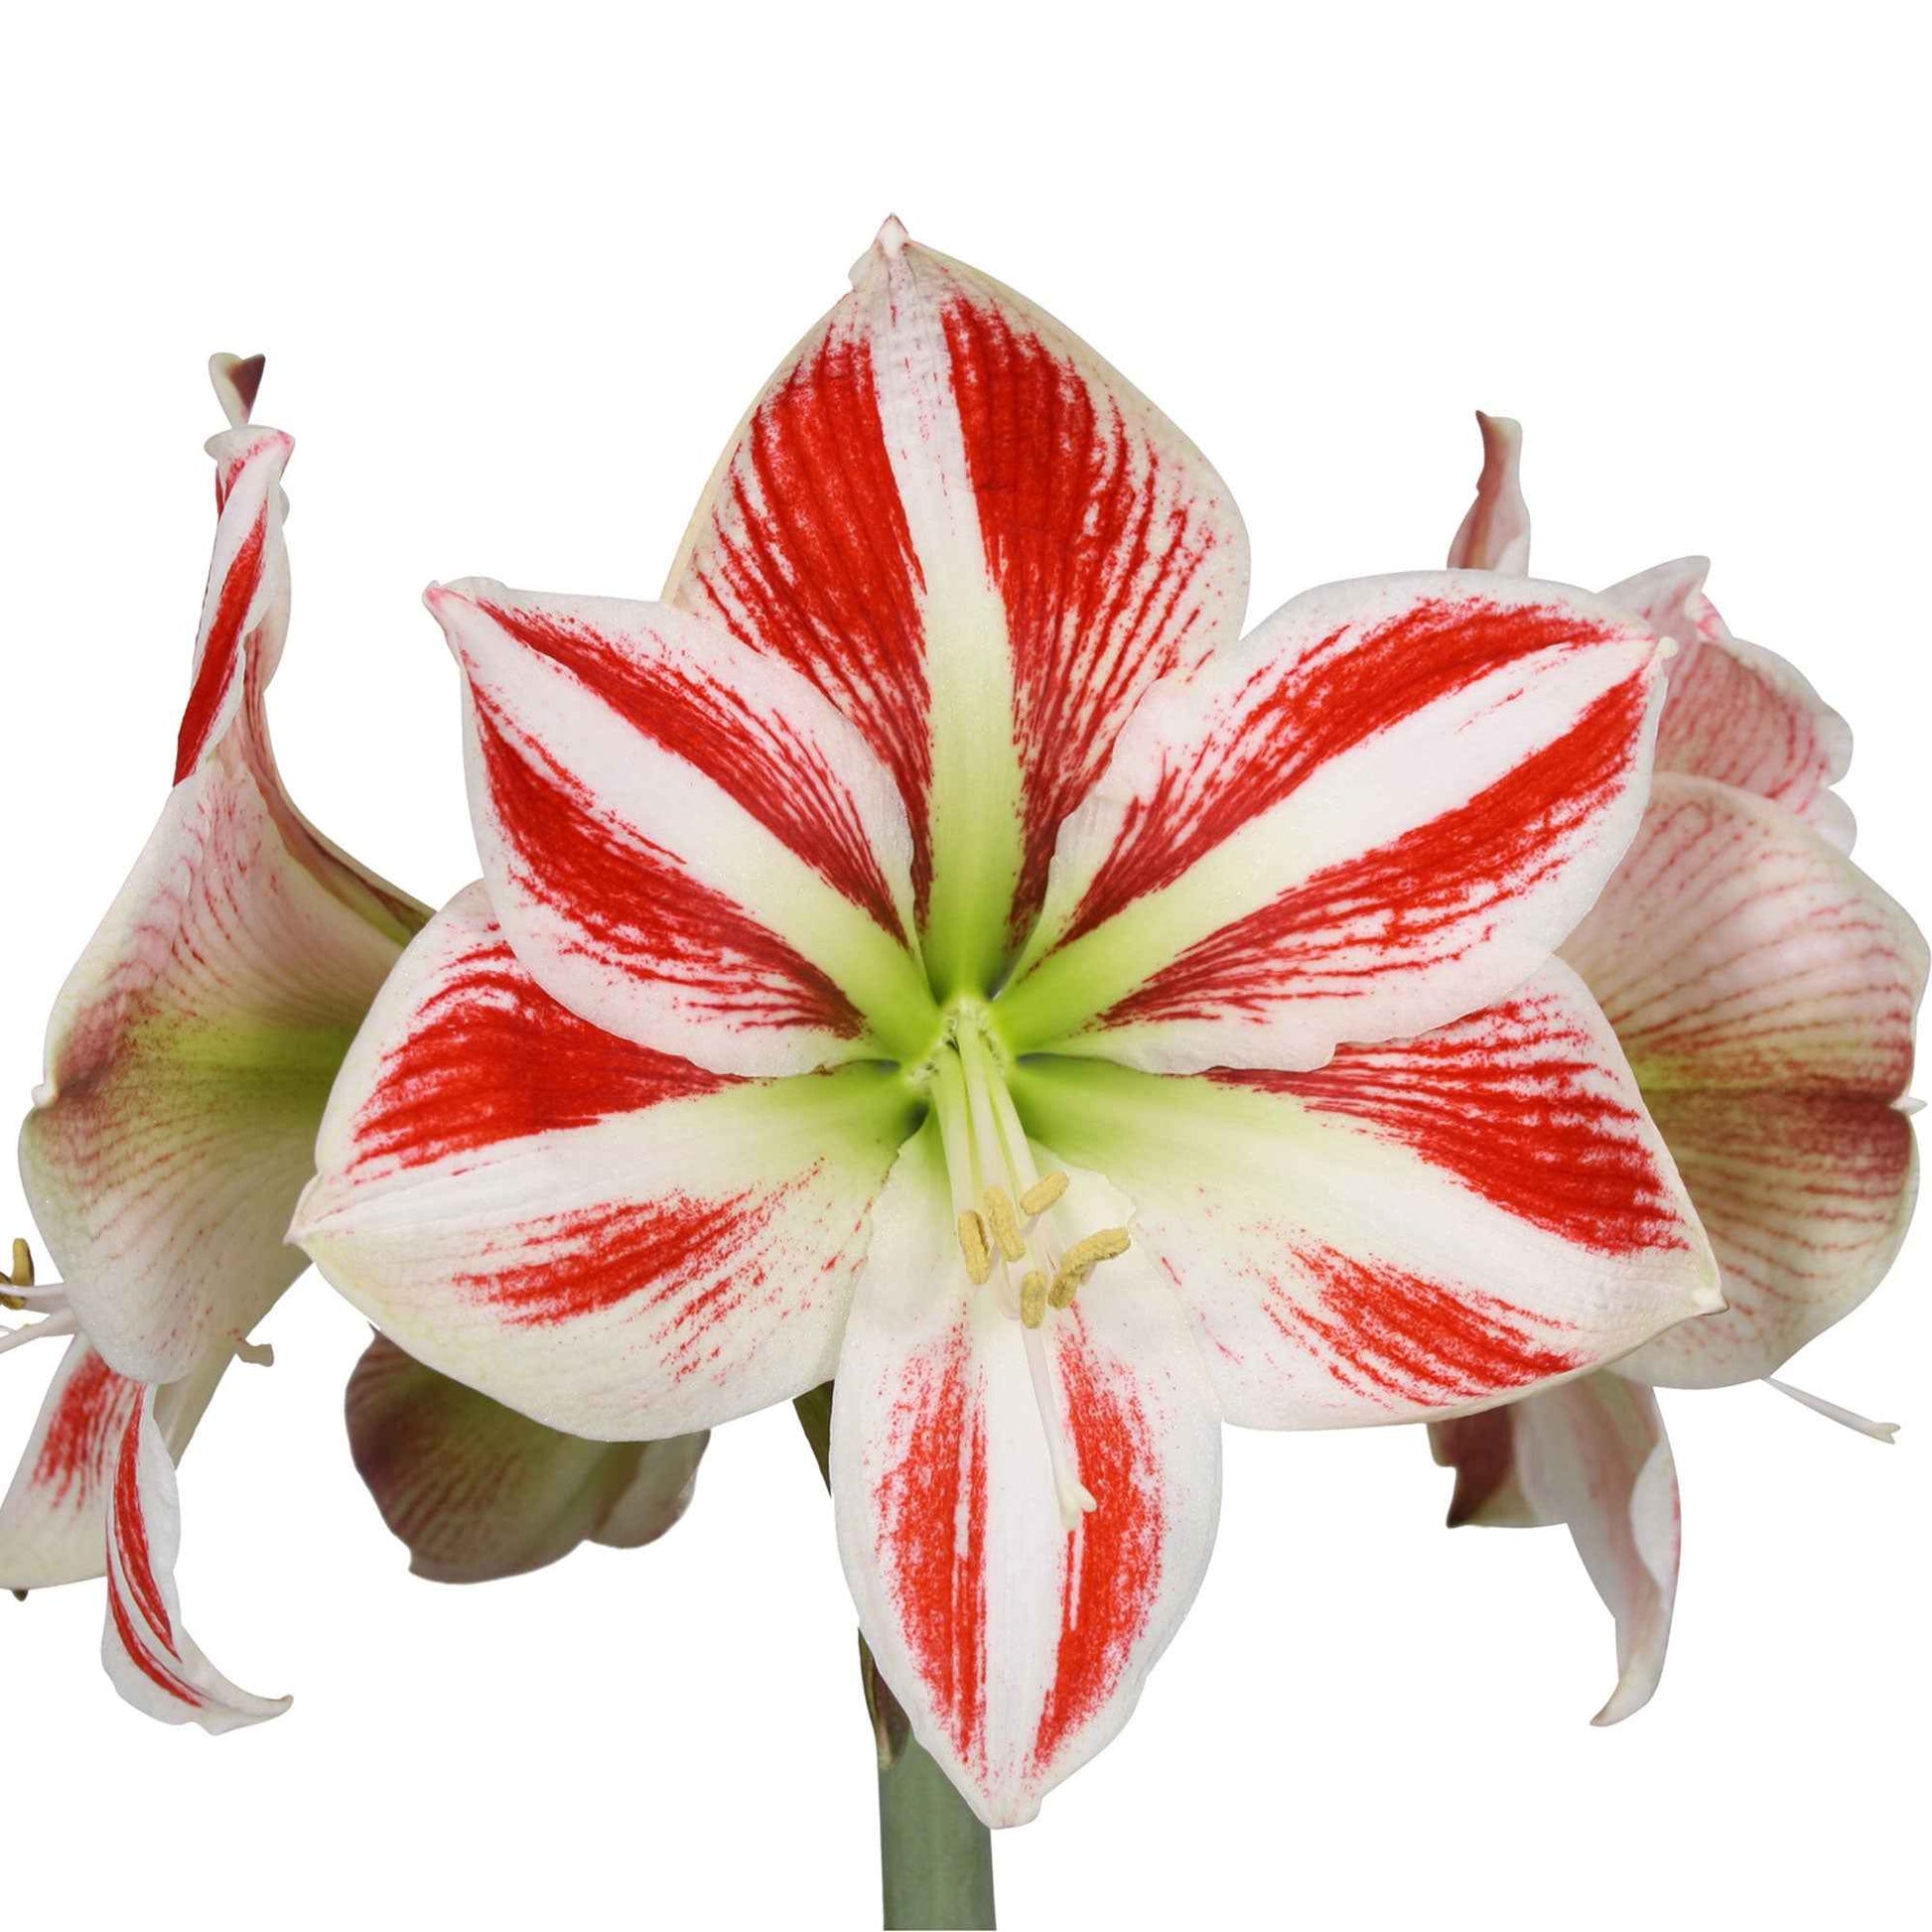 2x Amaryllis Hippeastrum Striped rood-wit incl. sierpotten - Alle populaire bloembollen